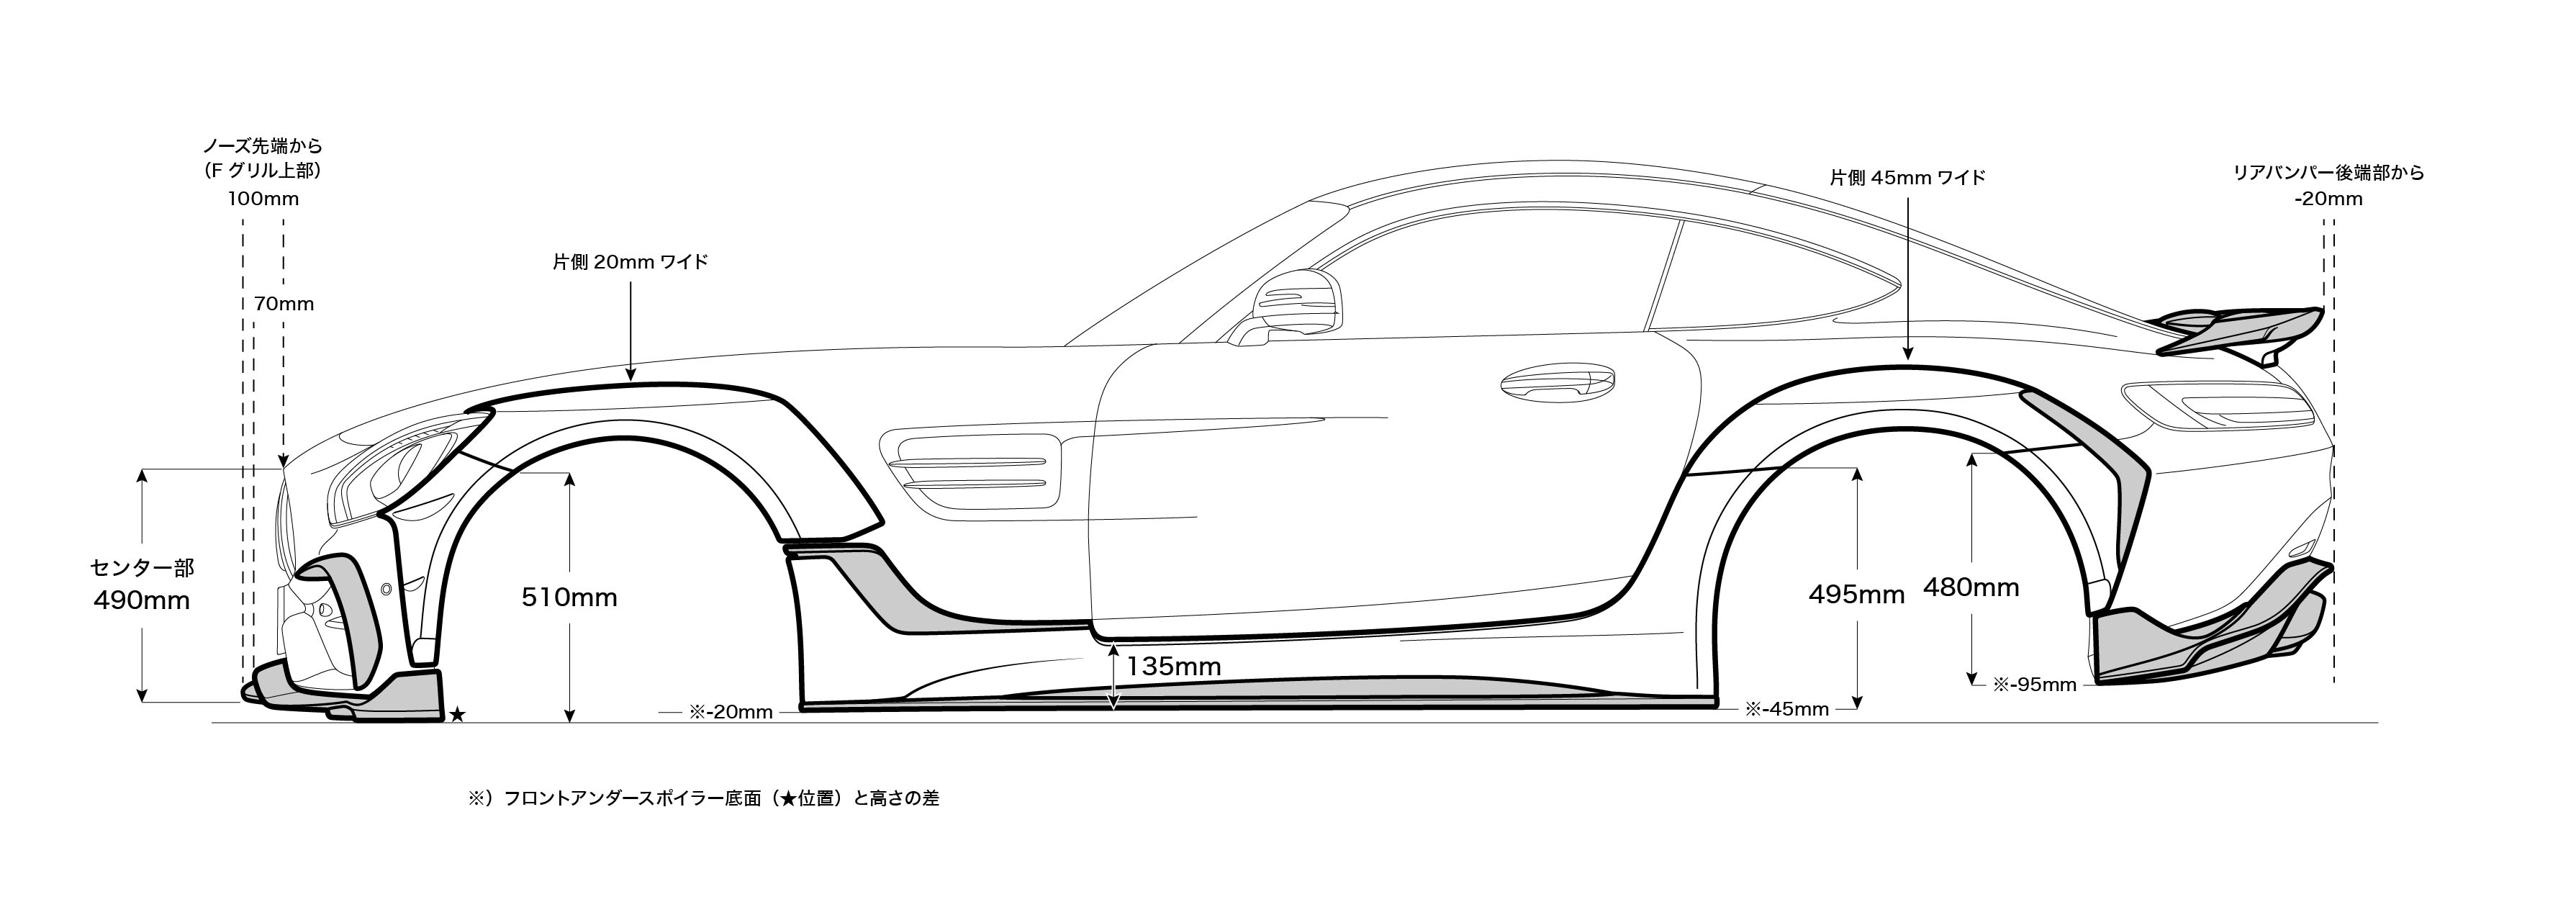 DESIGN WORKS Mercedes-AMG GT C Roadster エアロサイズ